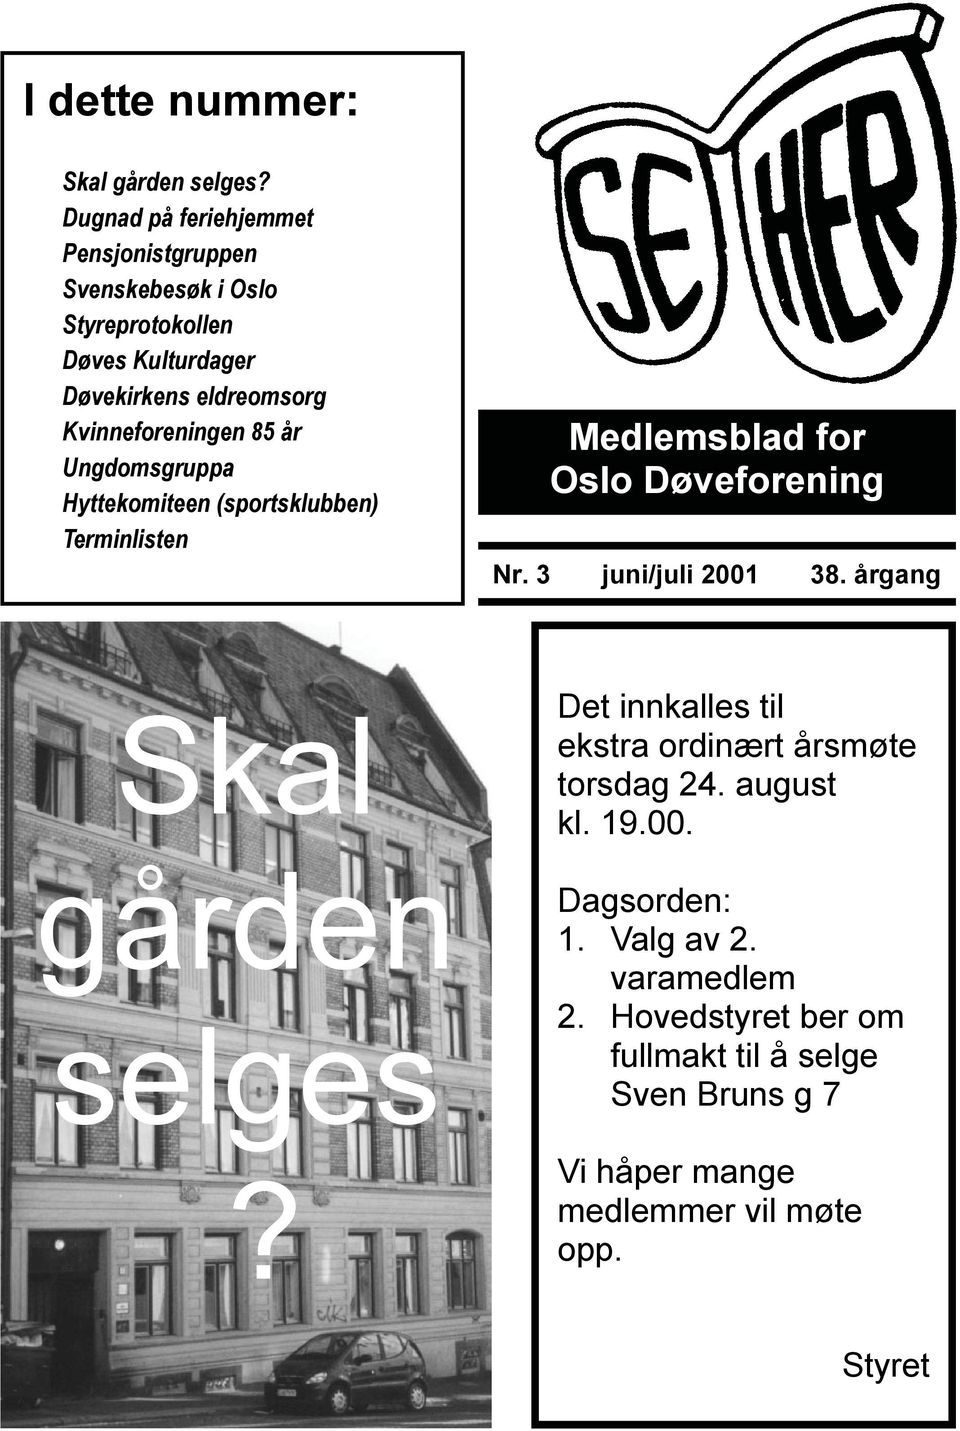 85 år Ungdomsgruppa Hyttekomiteen (sportsklubben) Terminlisten Medlemsblad for Oslo Døveforening Nr. 3 juni/juli 2001 38.